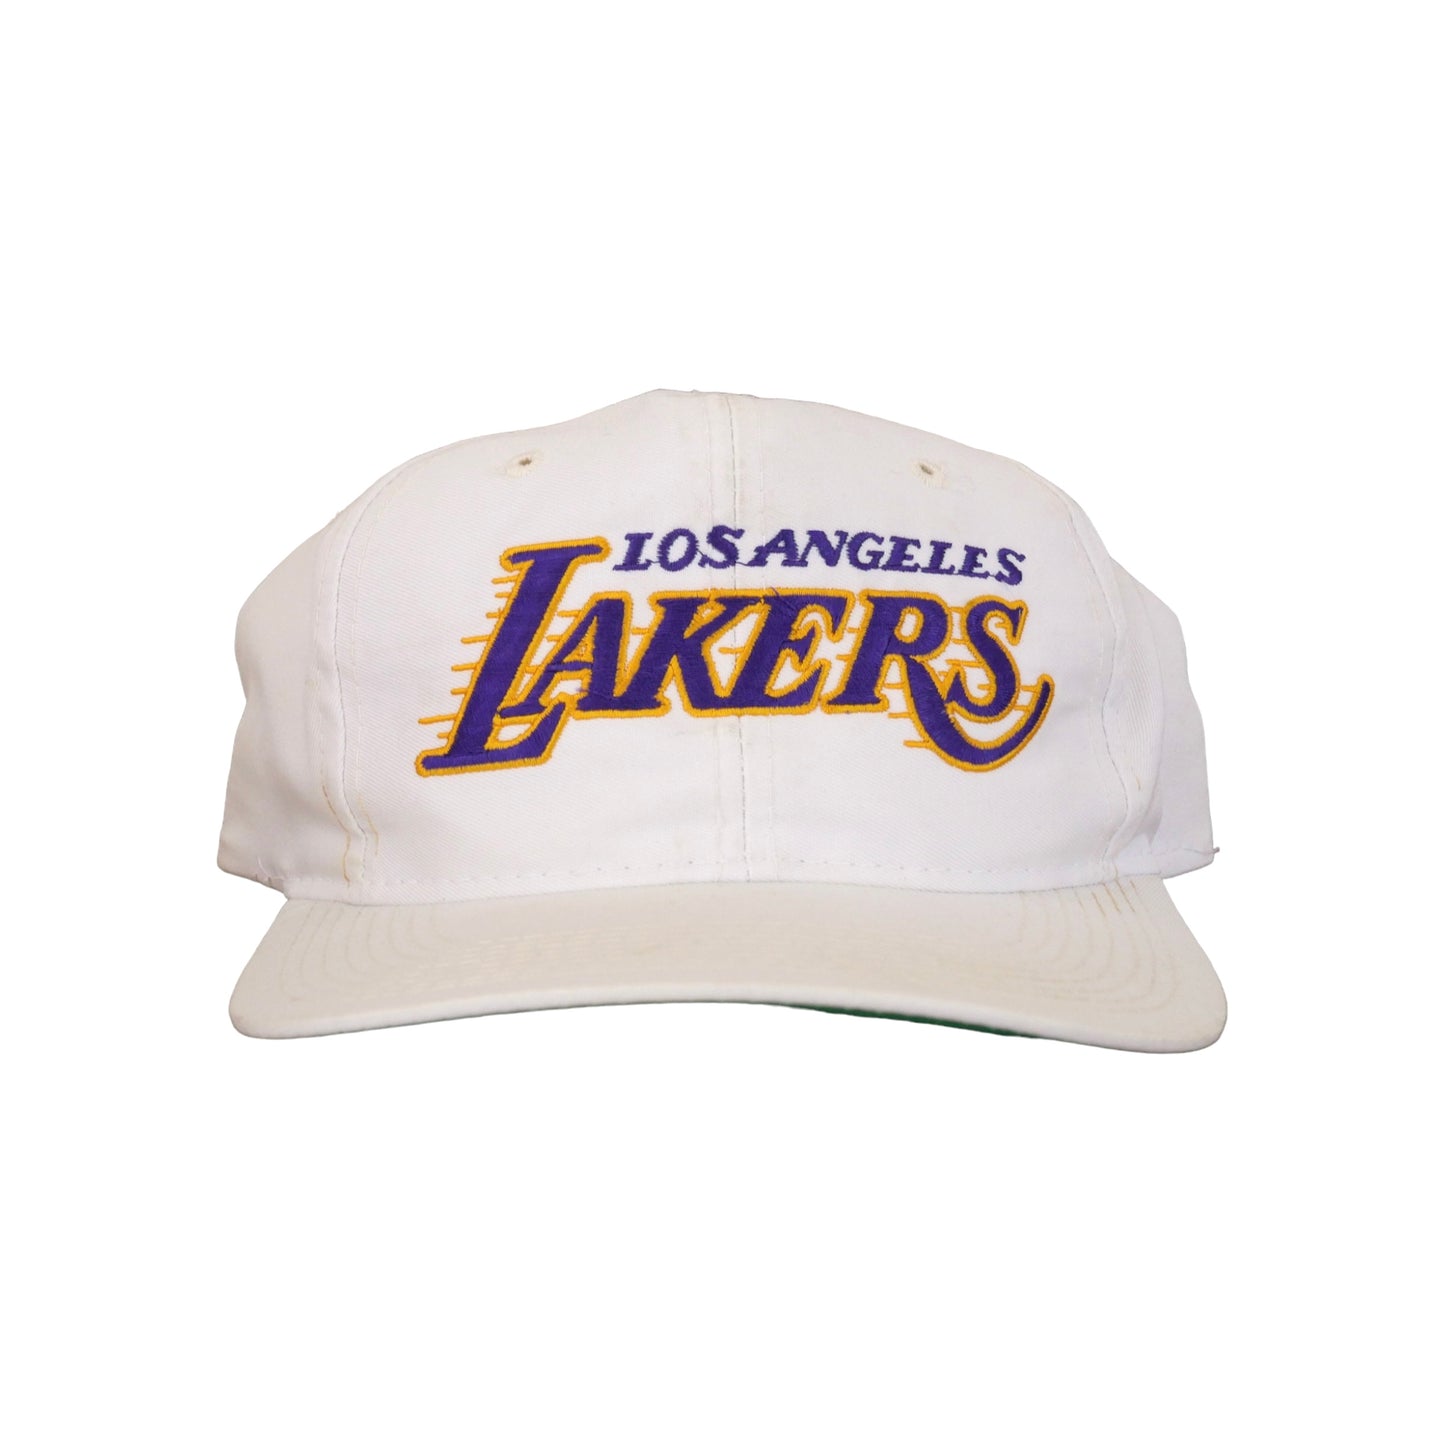 Los Angeles Lakers Sports Specialties Snapback Hat